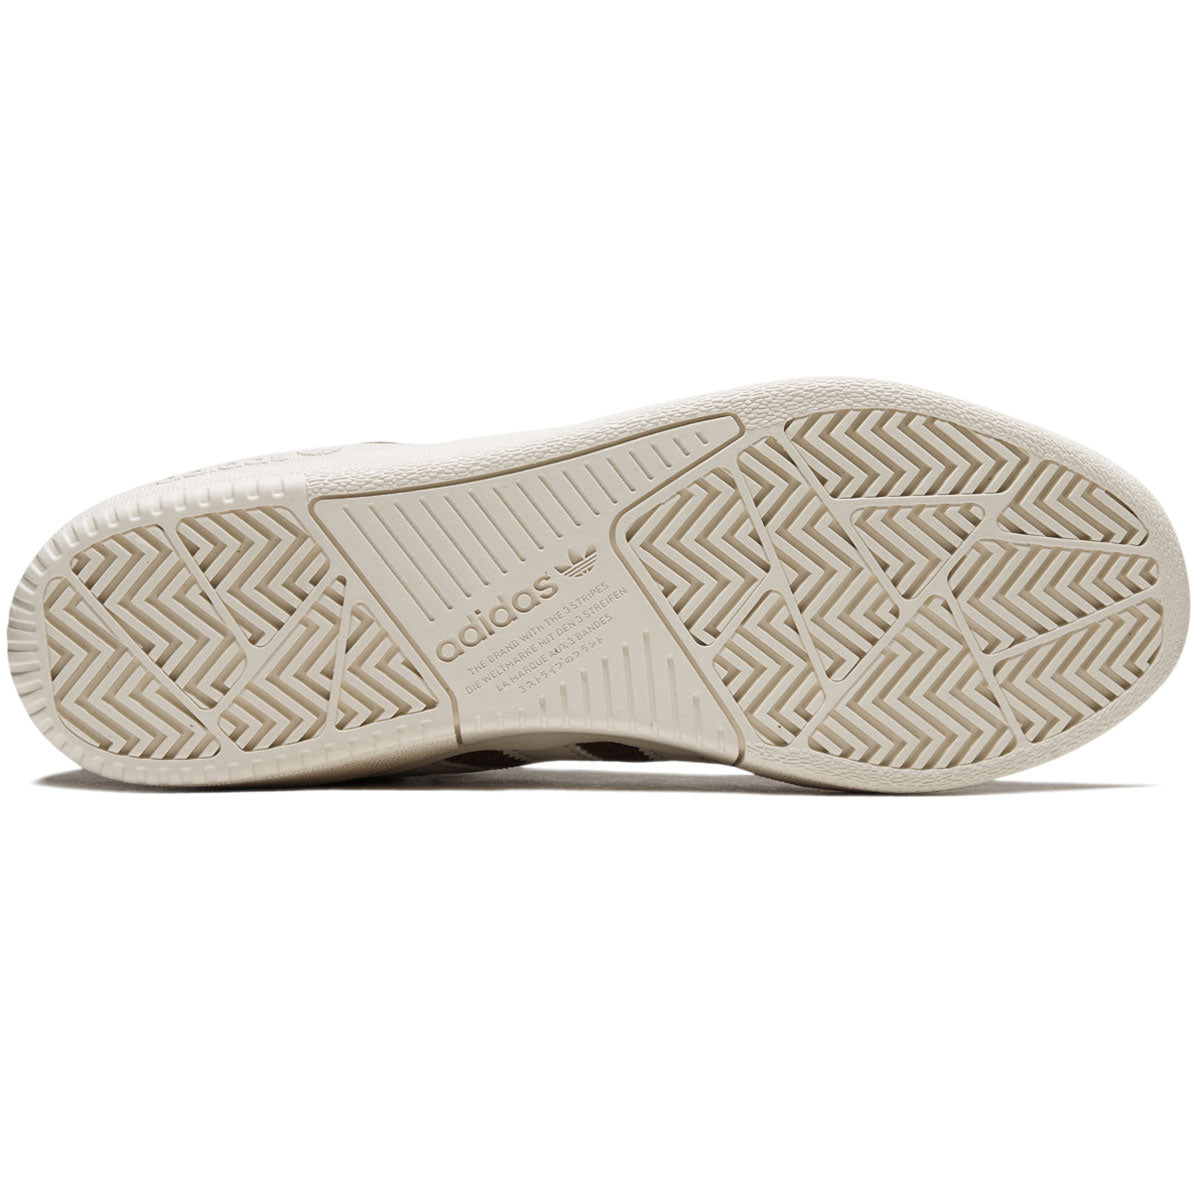 Adidas Tyshawn Shoes - Preloved Brown/White/Gold Metallic image 4